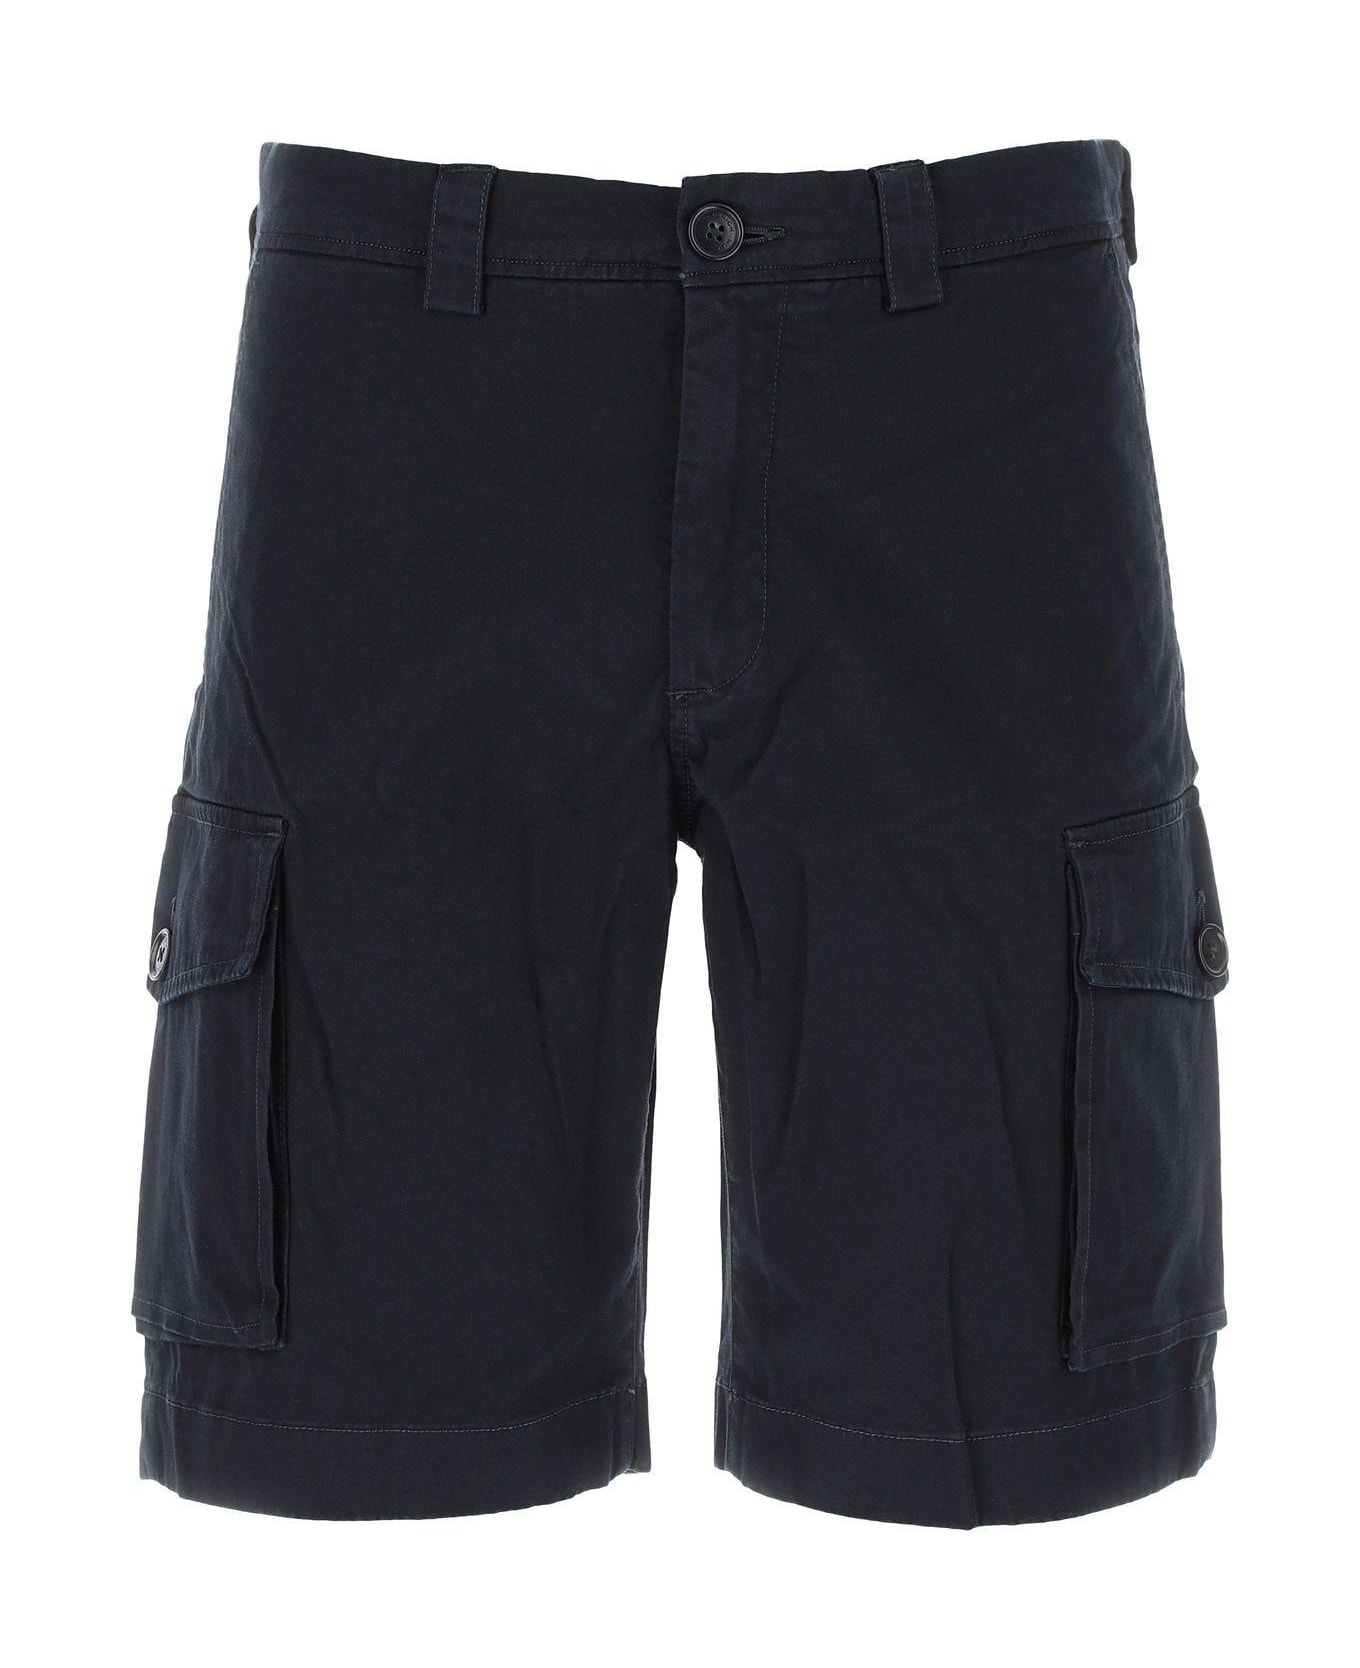 Woolrich Navy Blue Stretch Cotton Bermuda Shorts - Blu